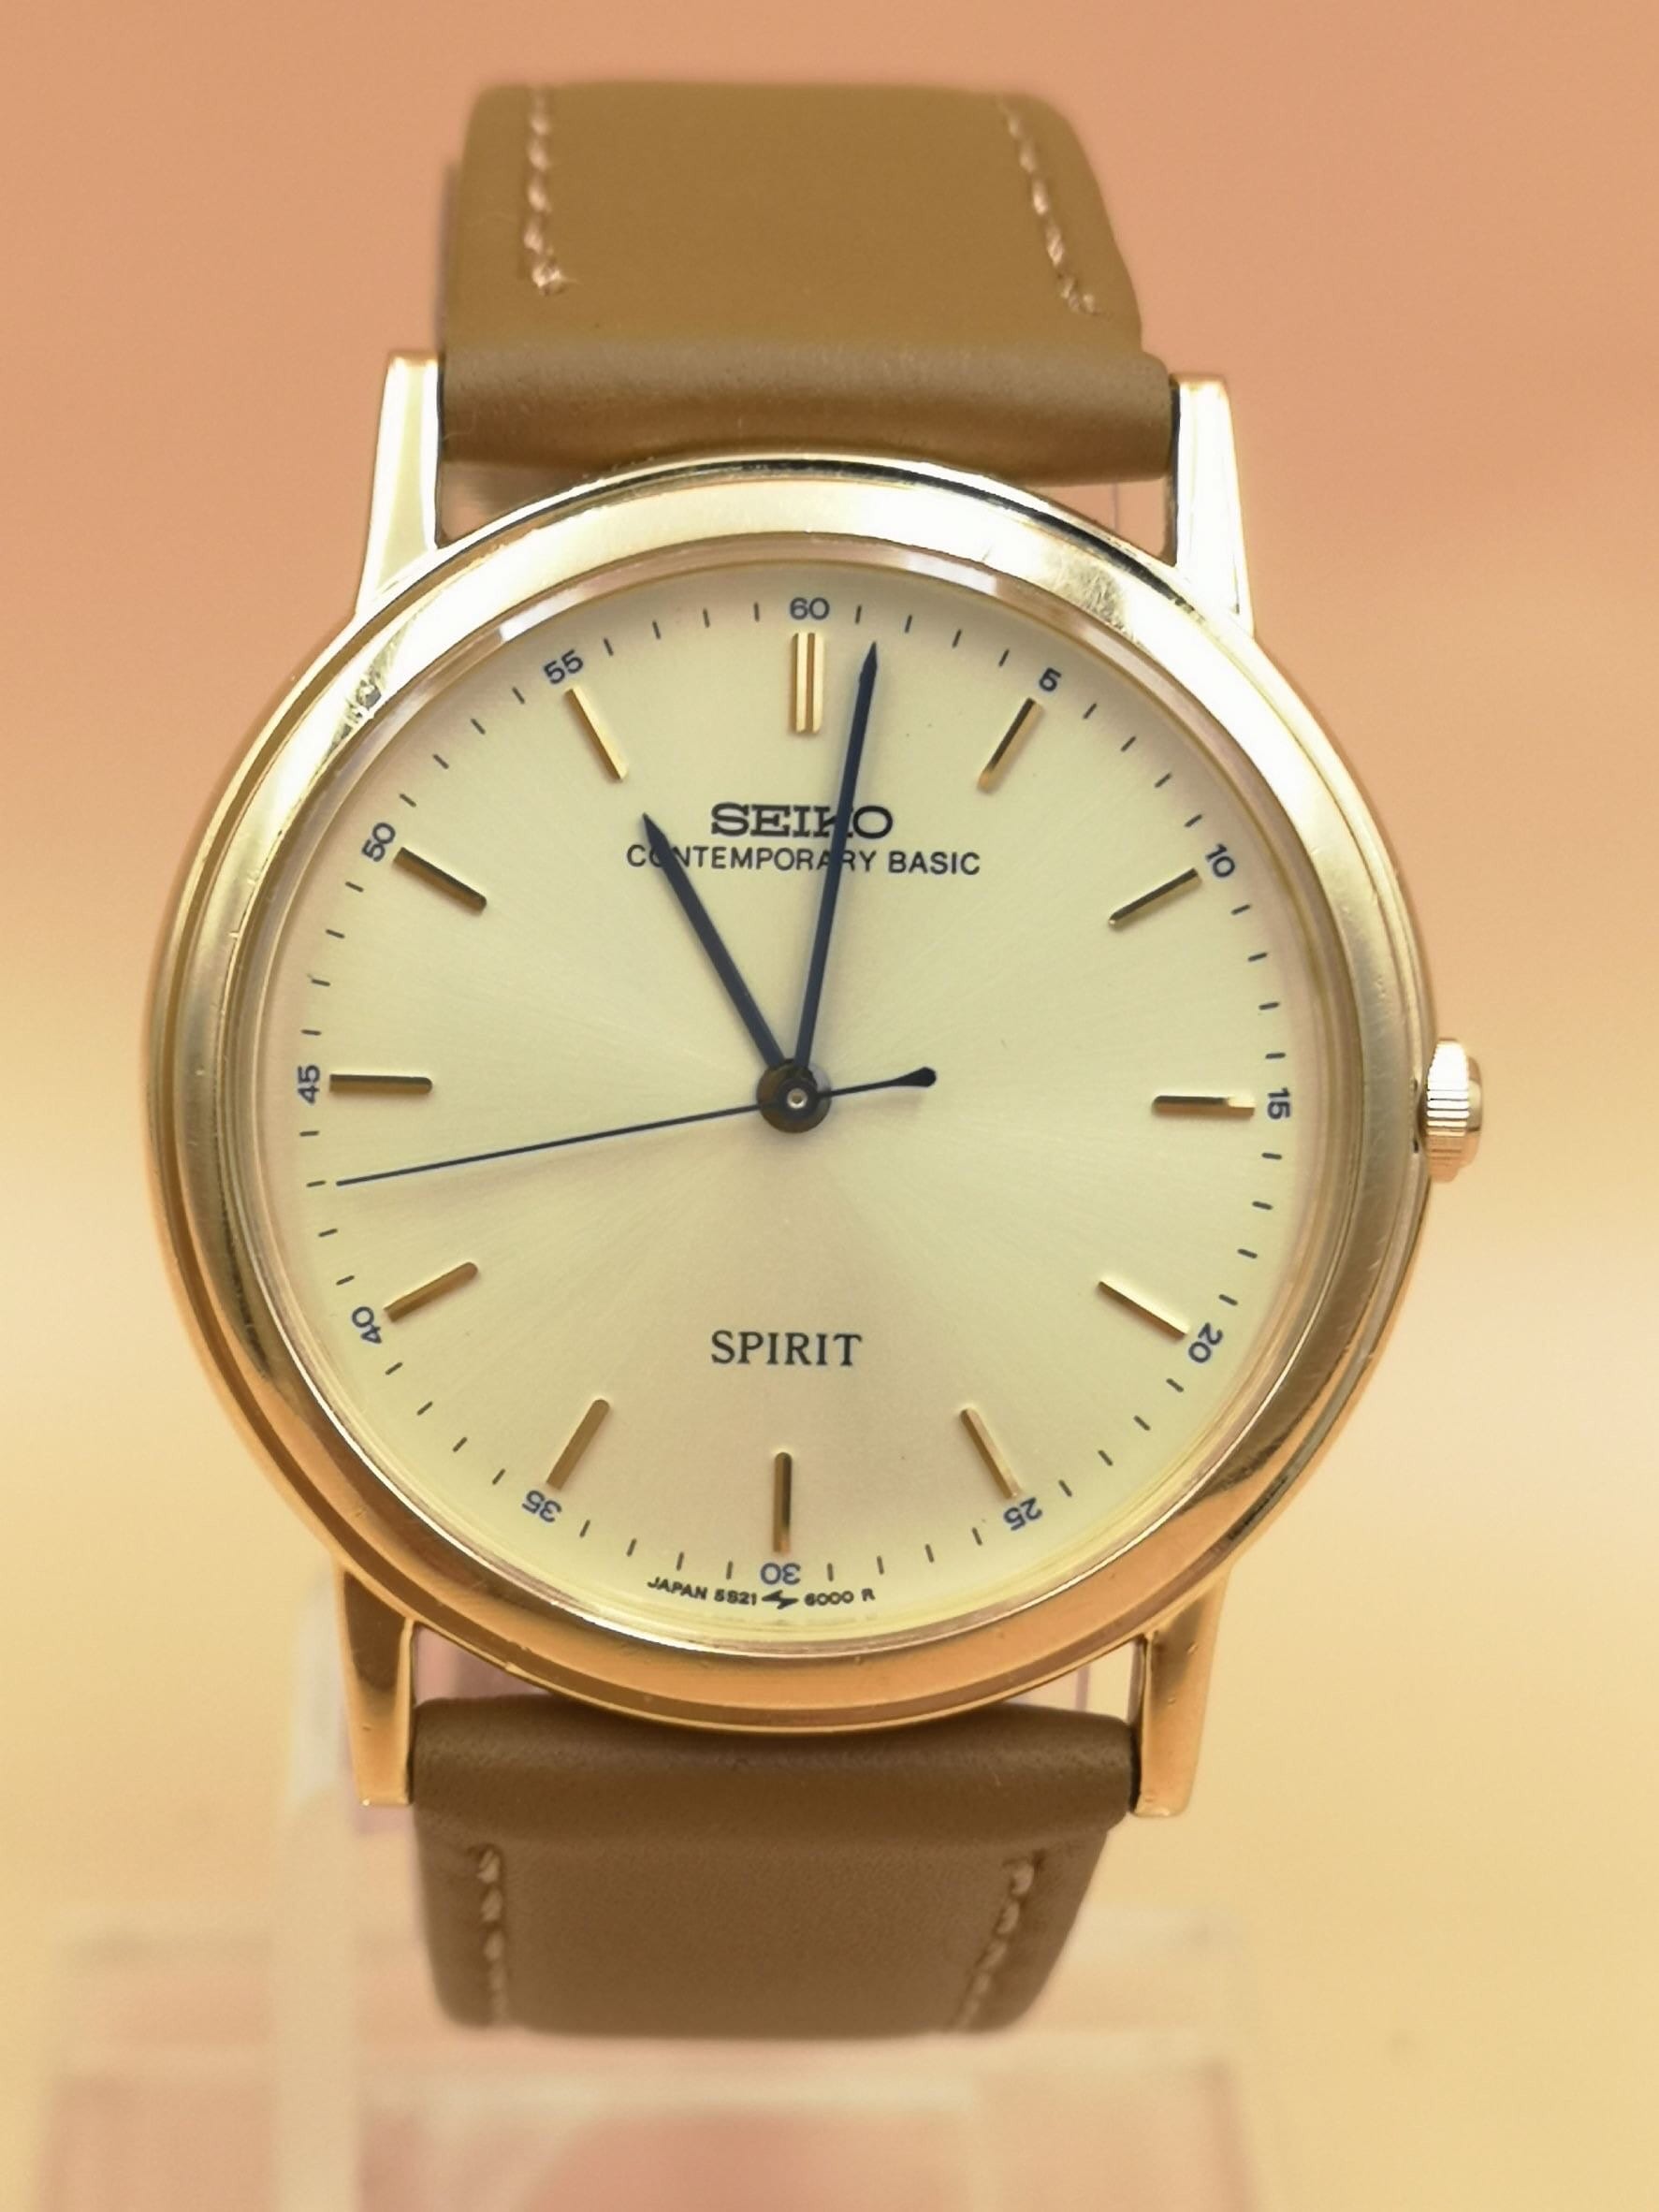 Vintage and Rare Seiko Contemporary Basic Spirit Watch - Etsy